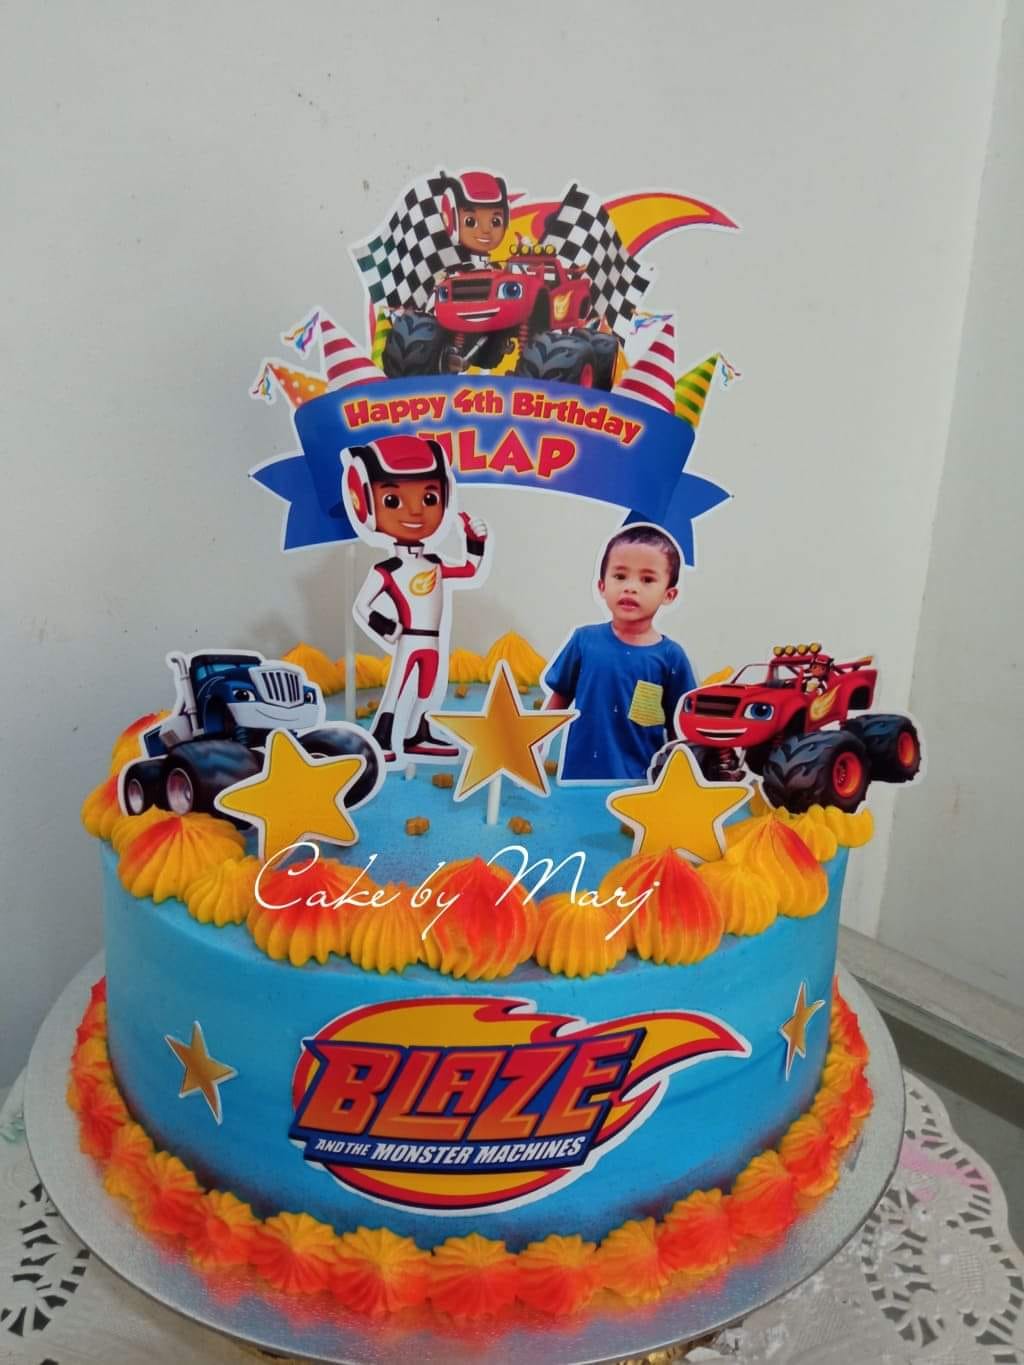 Blaze birthday cake | Blaze birthday cake, Blaze cakes, Blaze birthday